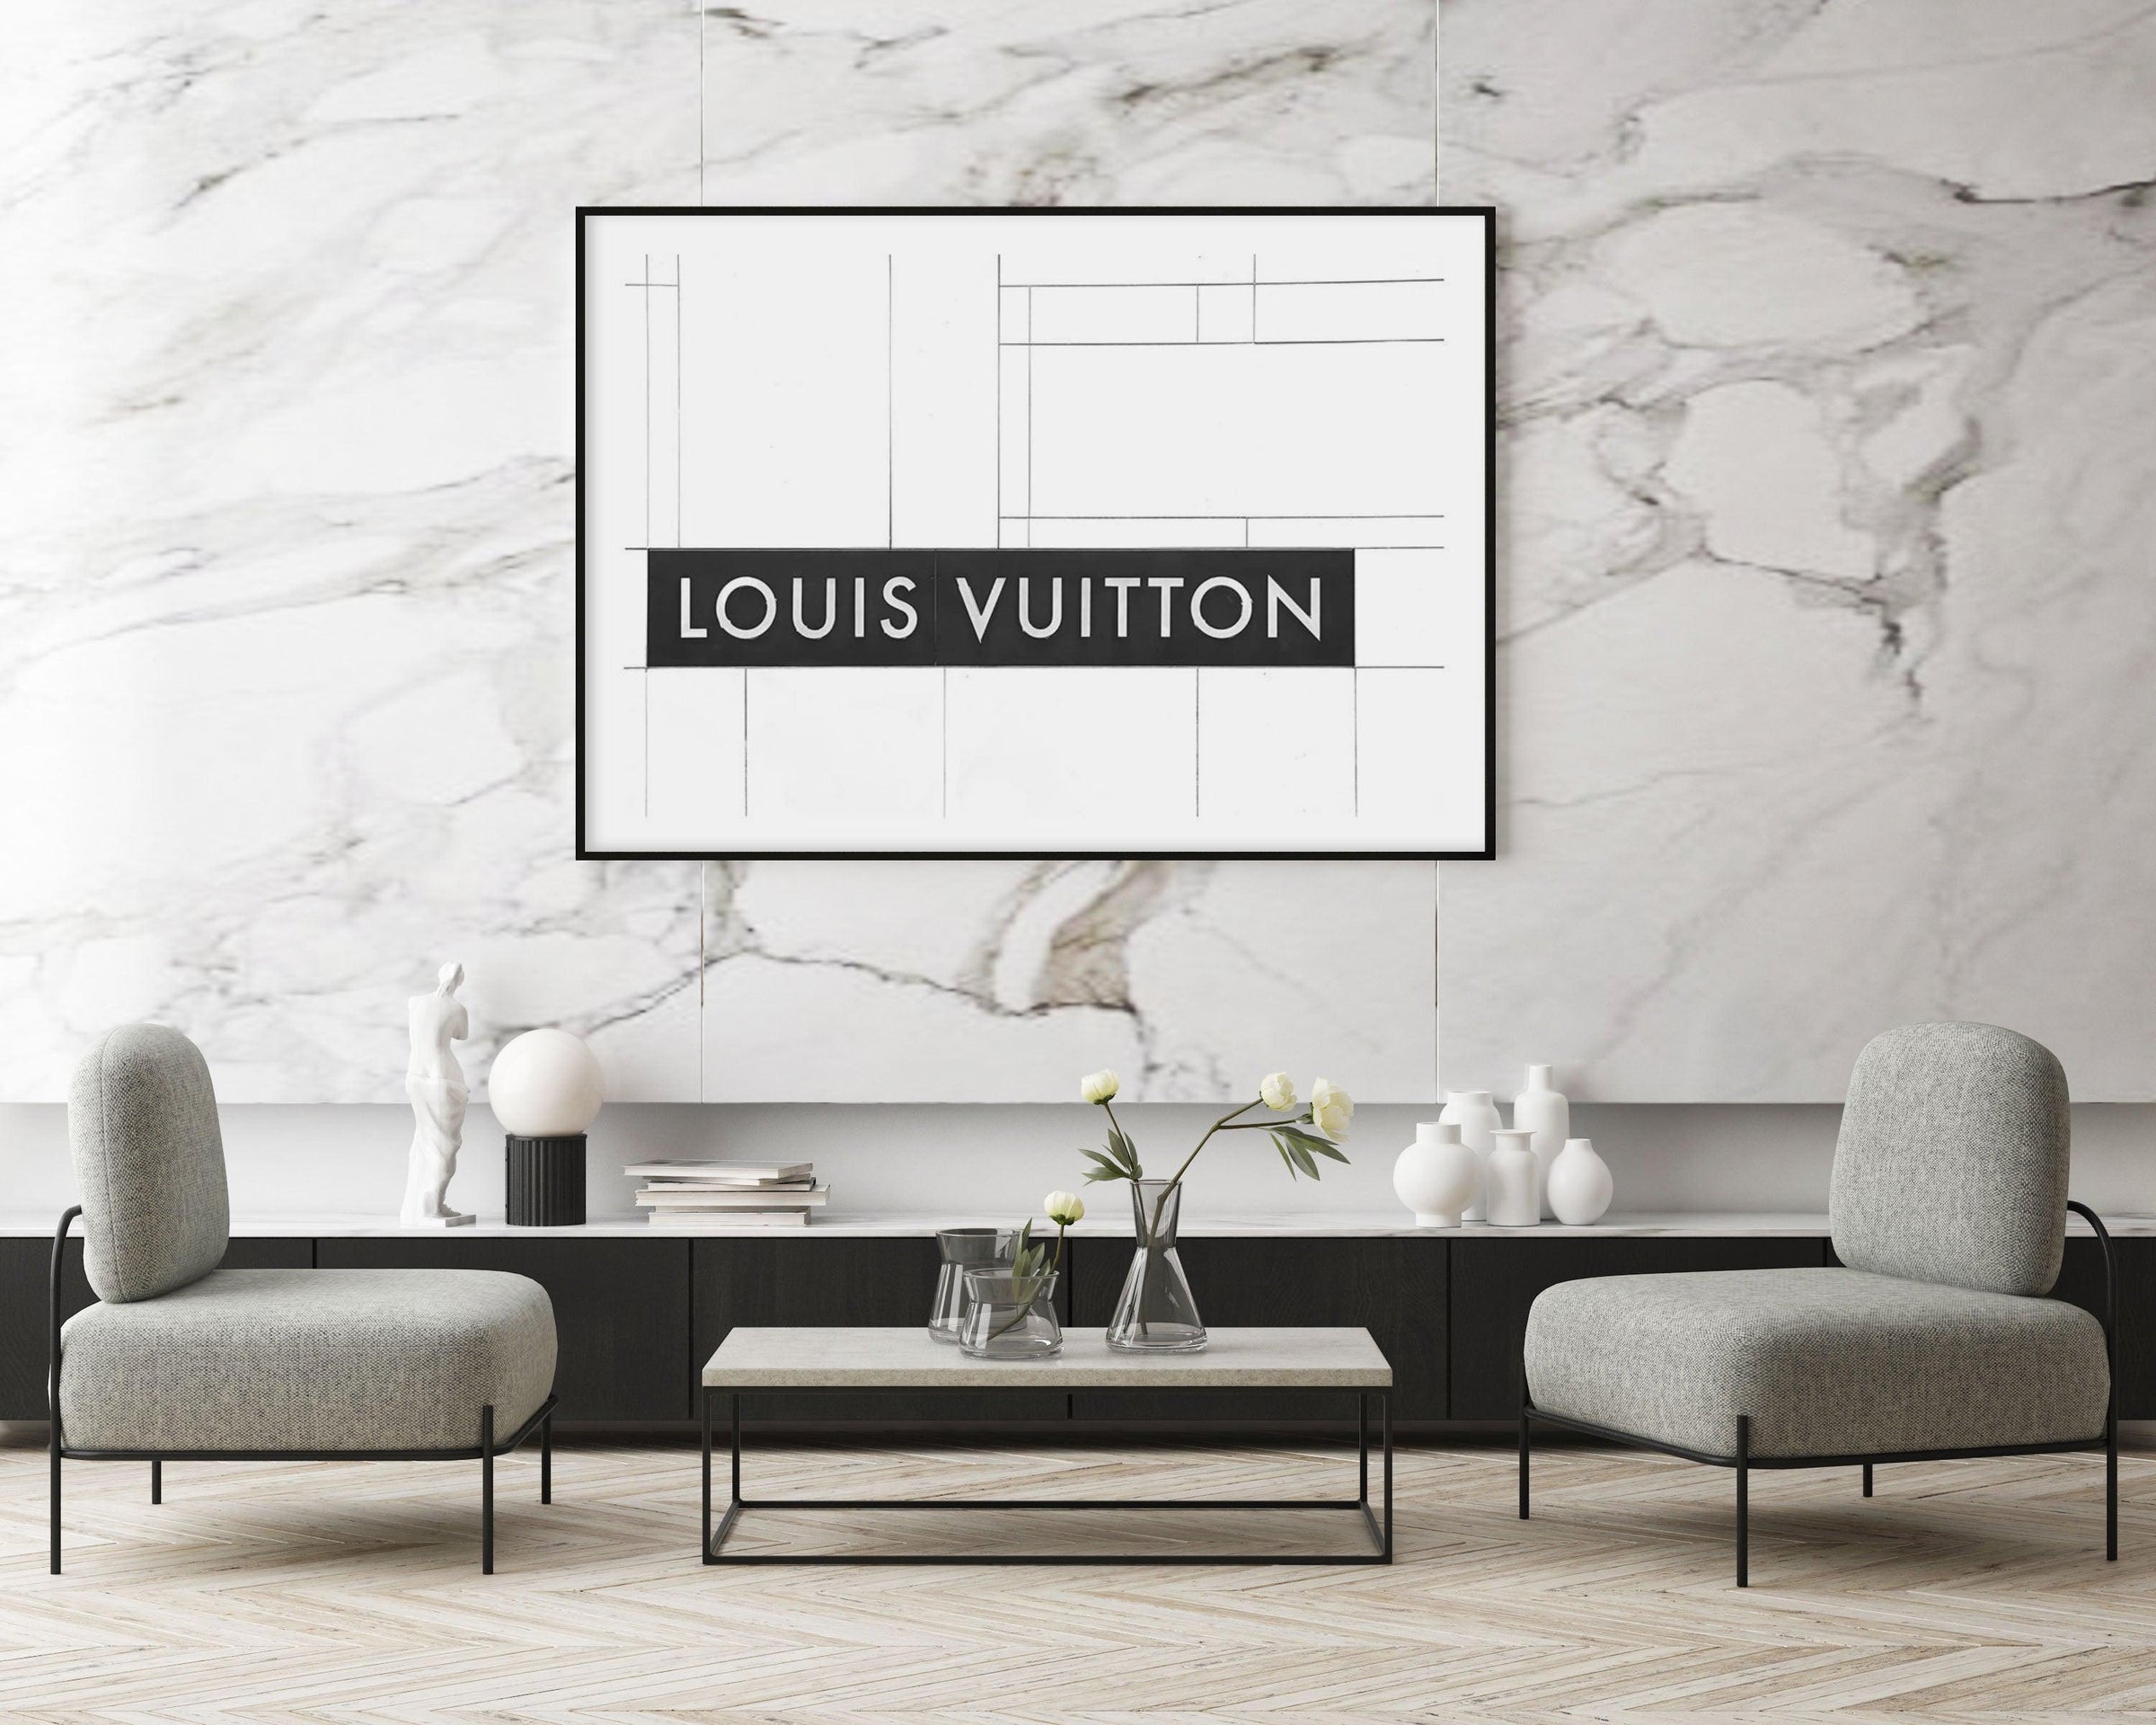 SHOP Louis Vuitton  Cannes Designer Art Print or Poster From $9.95 – Olive  et Oriel